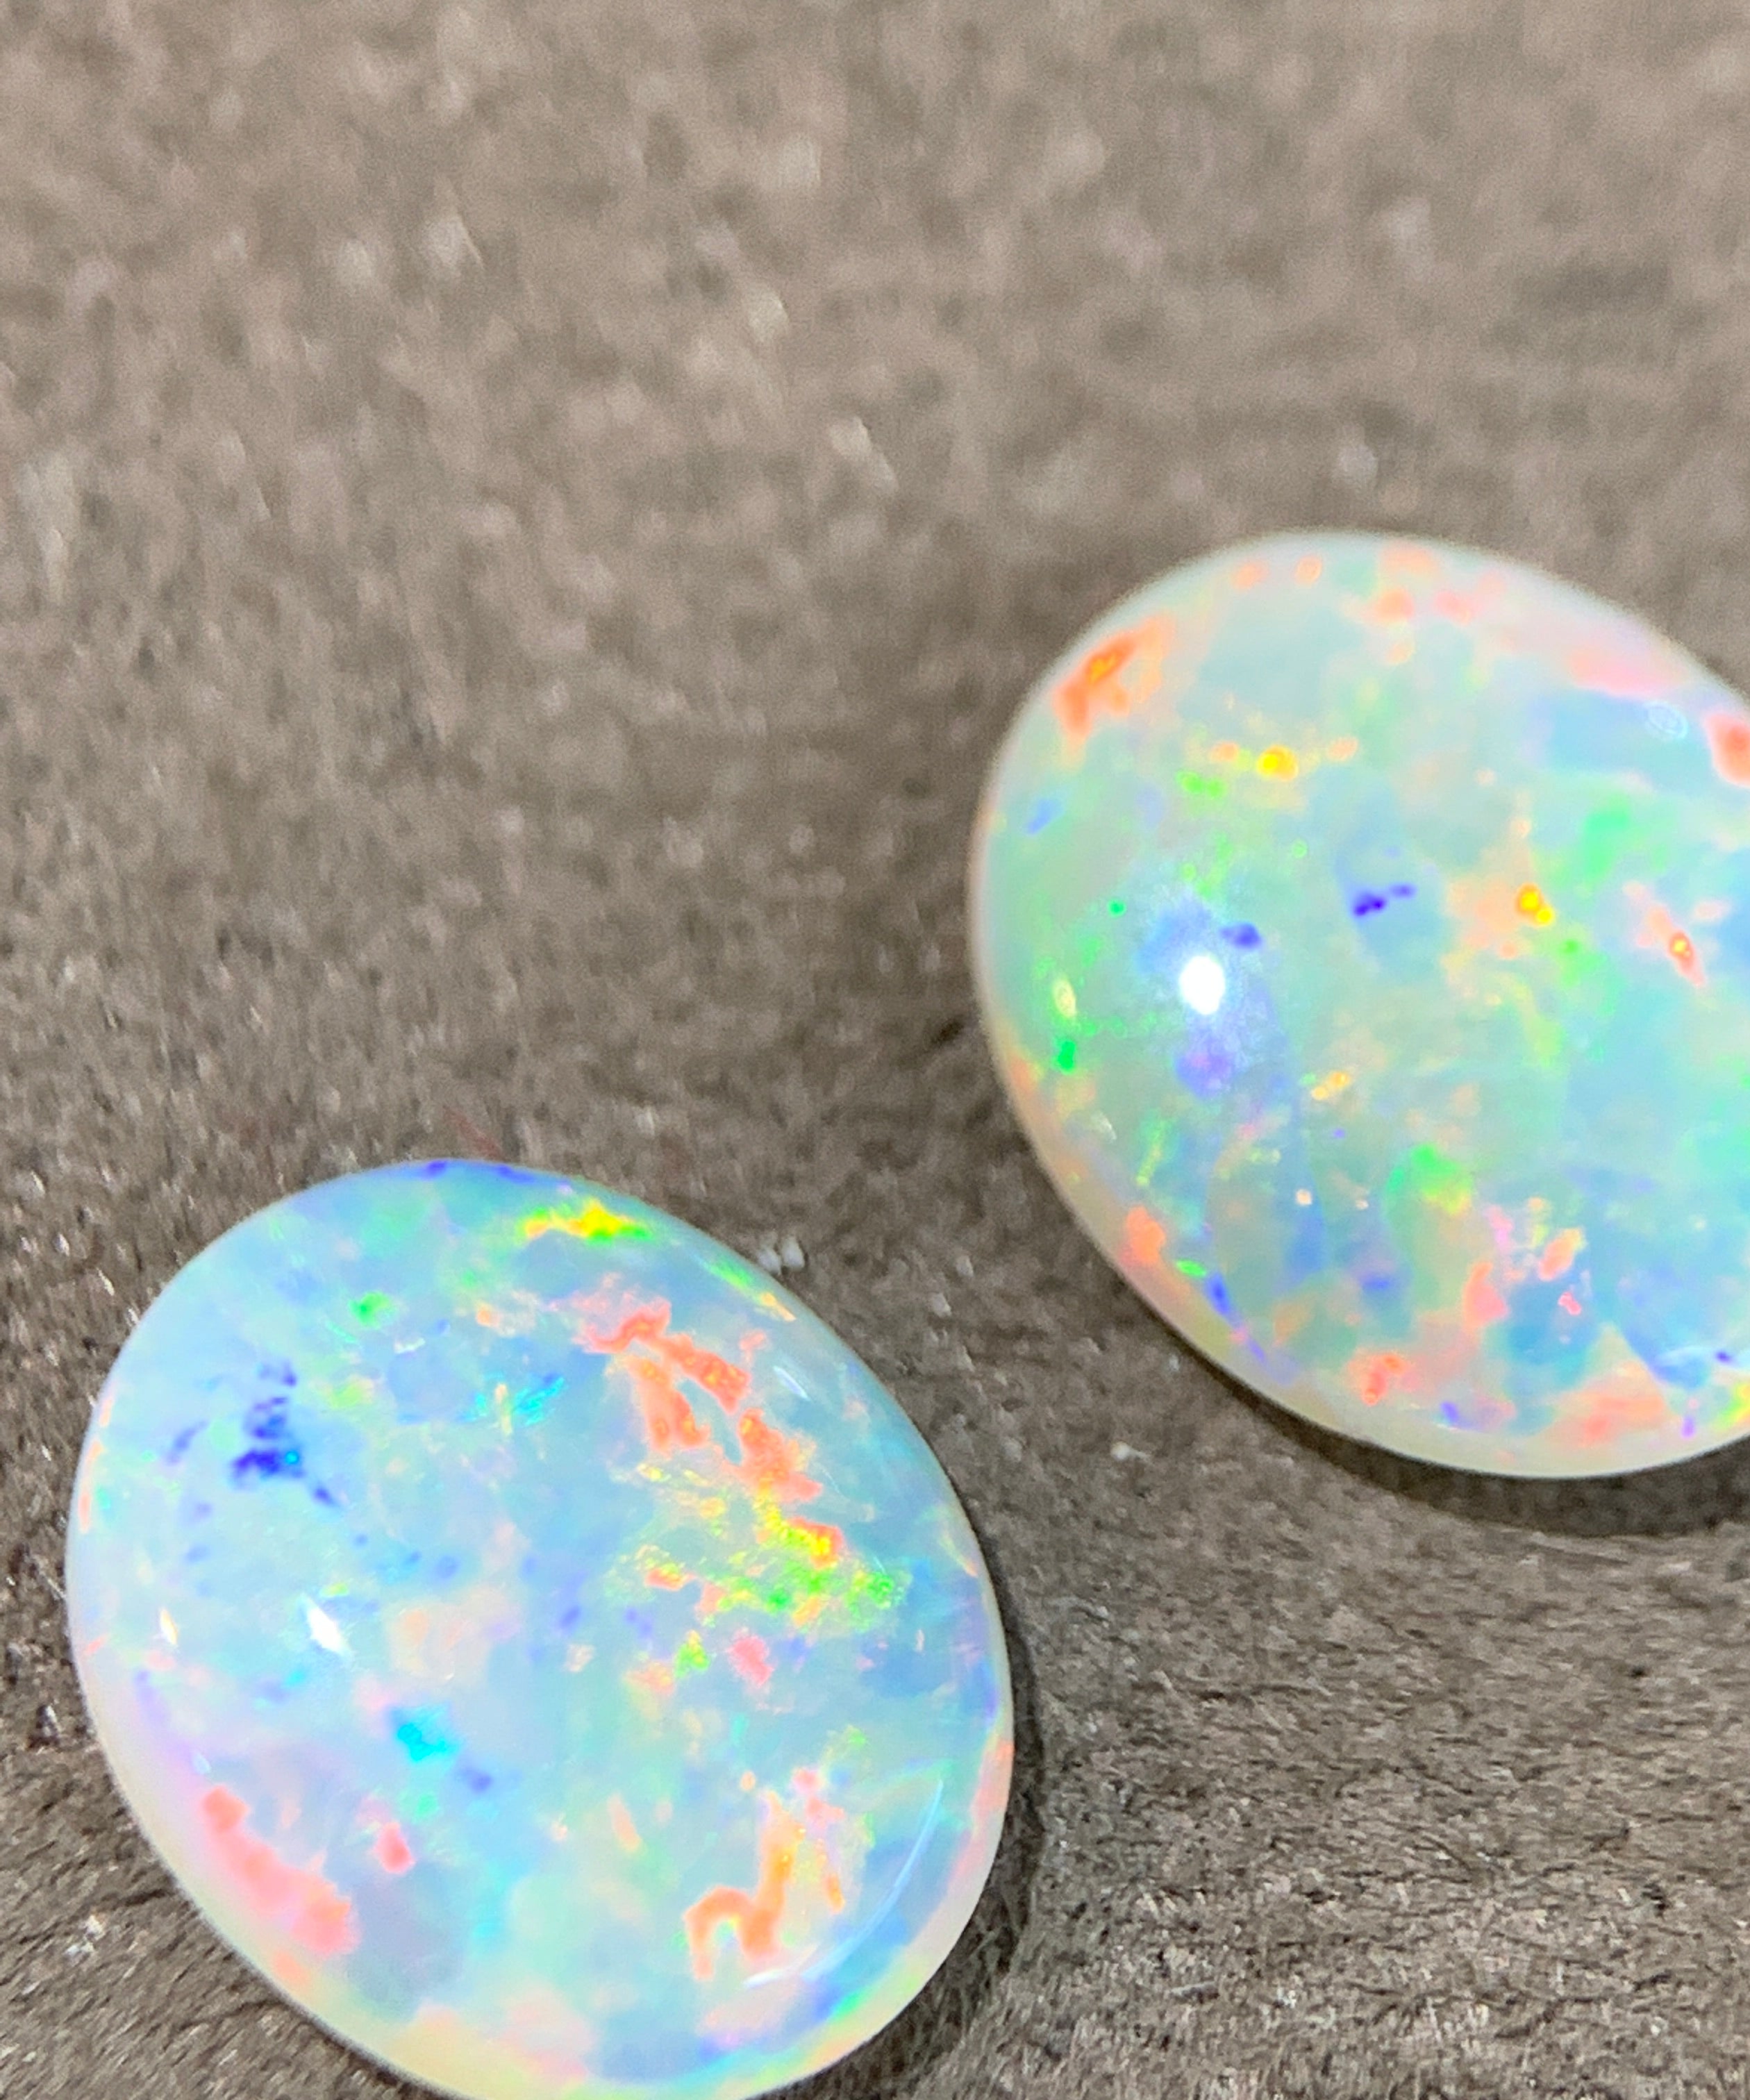 Pair of 3.3ct White Fire Opals - Masterpiece Jewellery Opal & Gems Sydney Australia | Online Shop